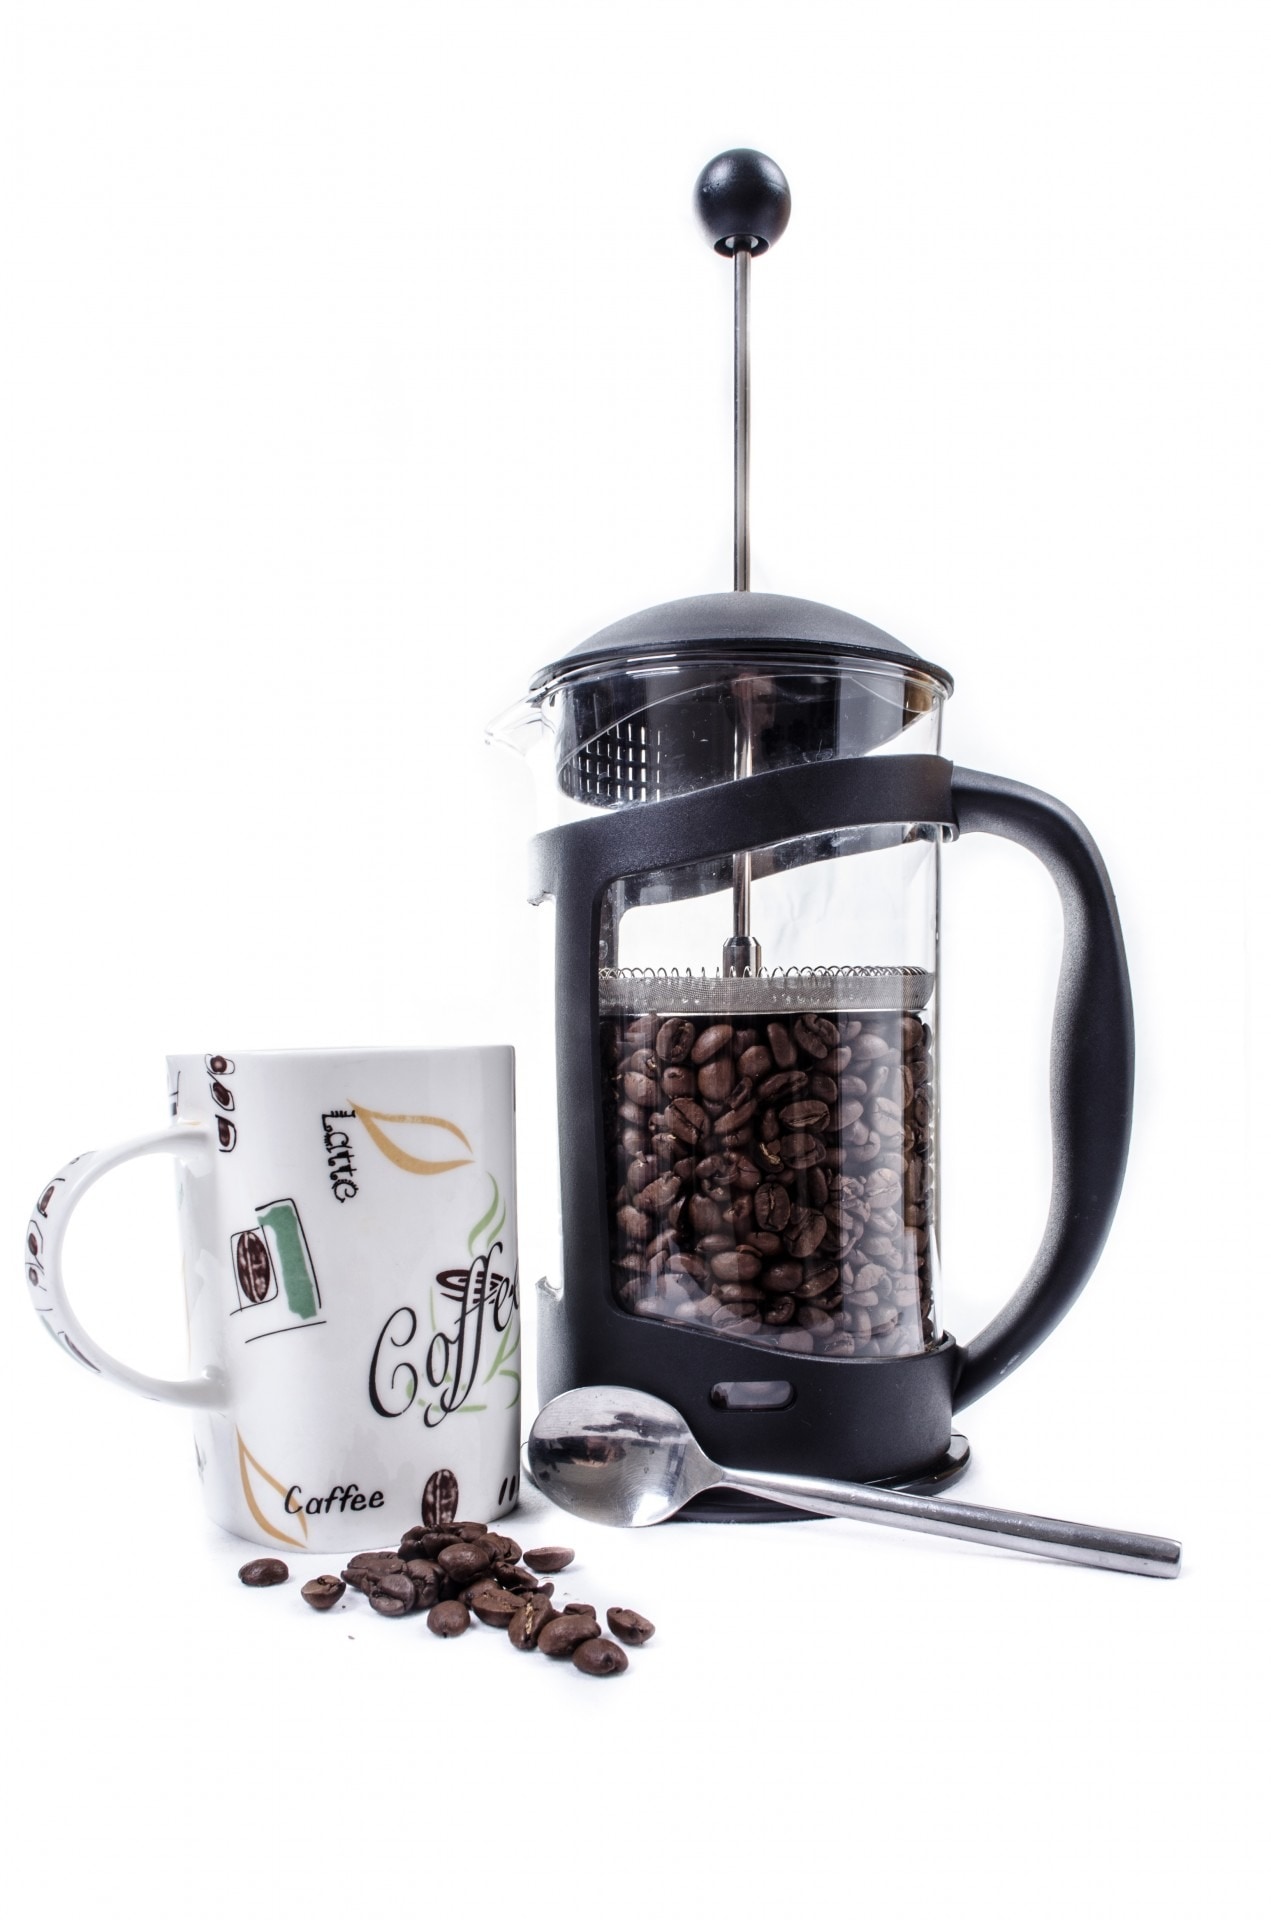 black press coffeemaker and white ceramic mug